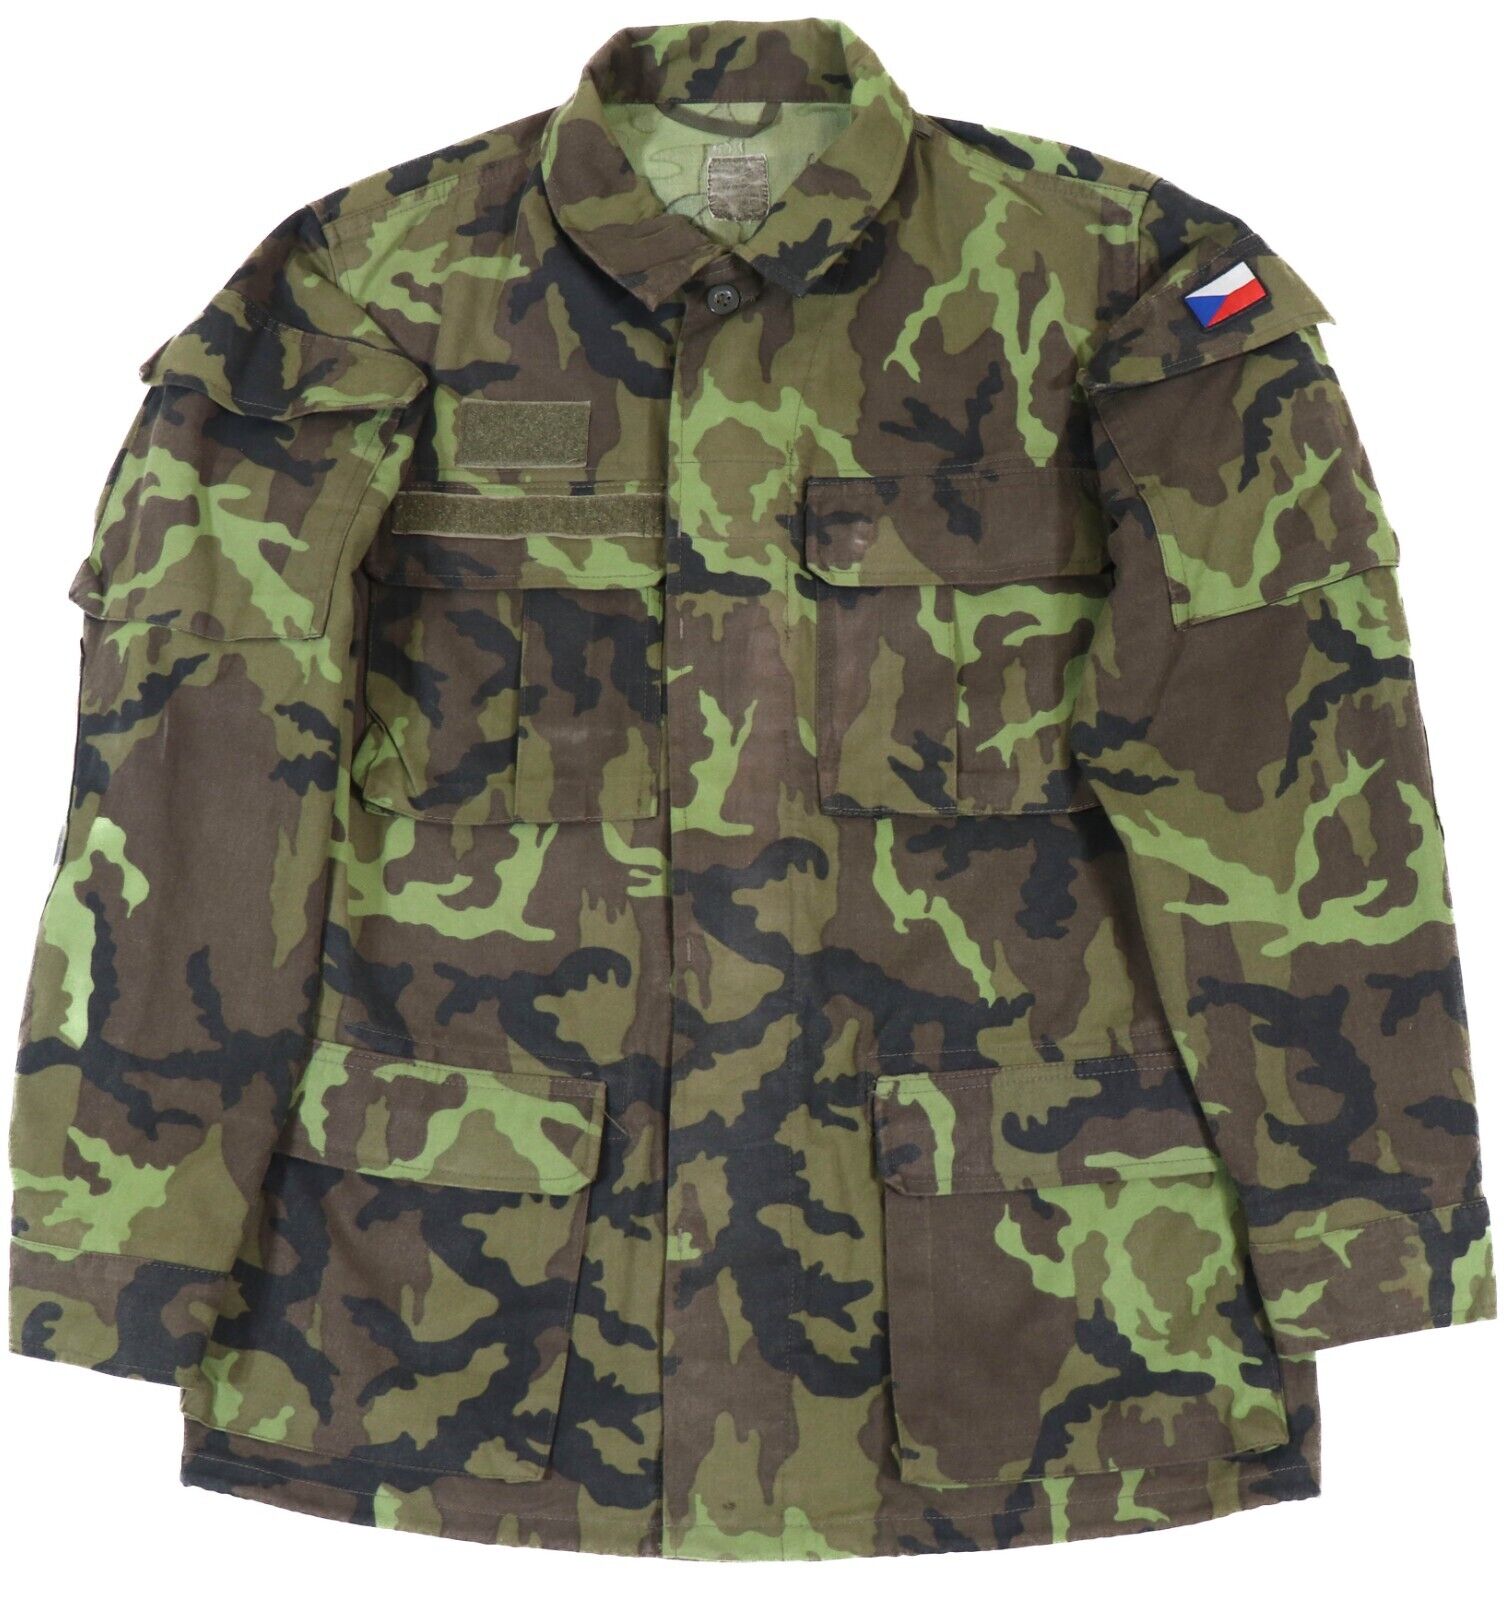 XLarge - Czech Army M95 Woodland Camo Combat Field Jacket Military Uniform Parka